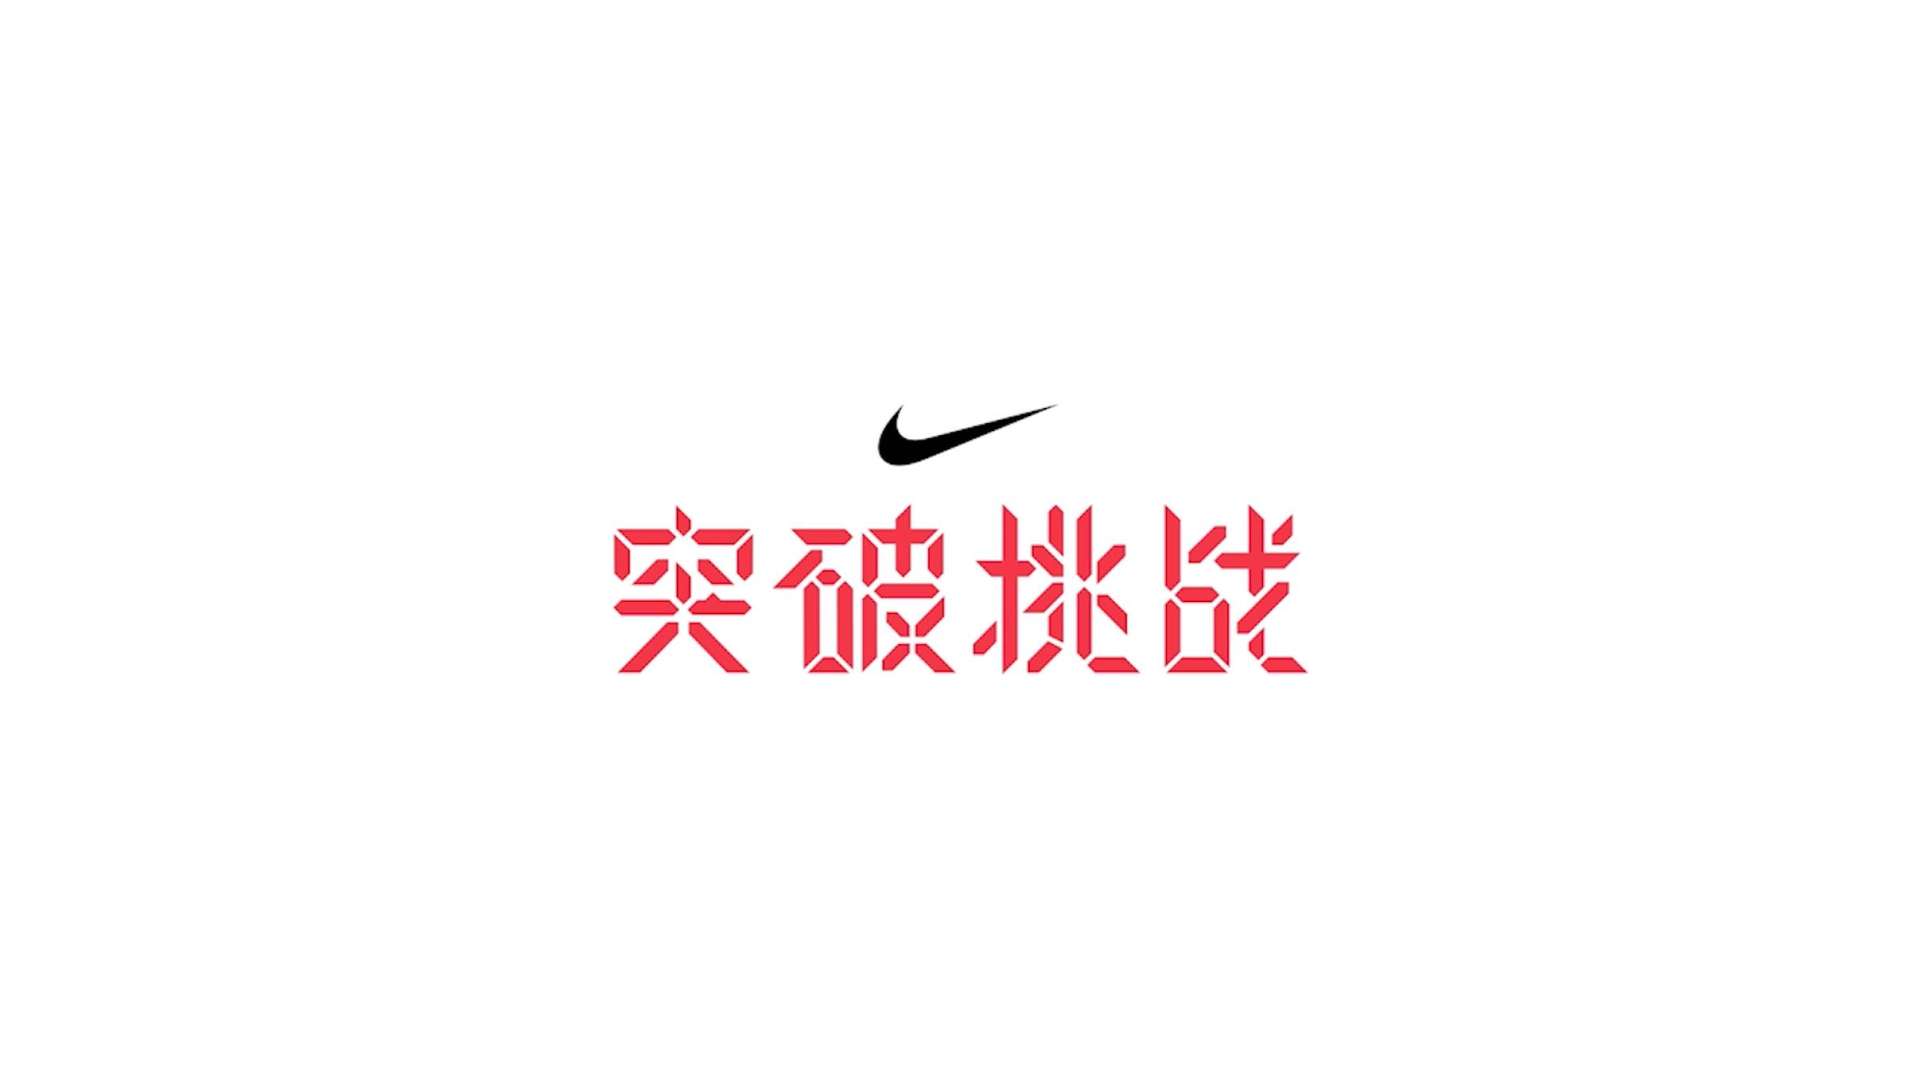 Nike 耐克 突破挑战 - 任远